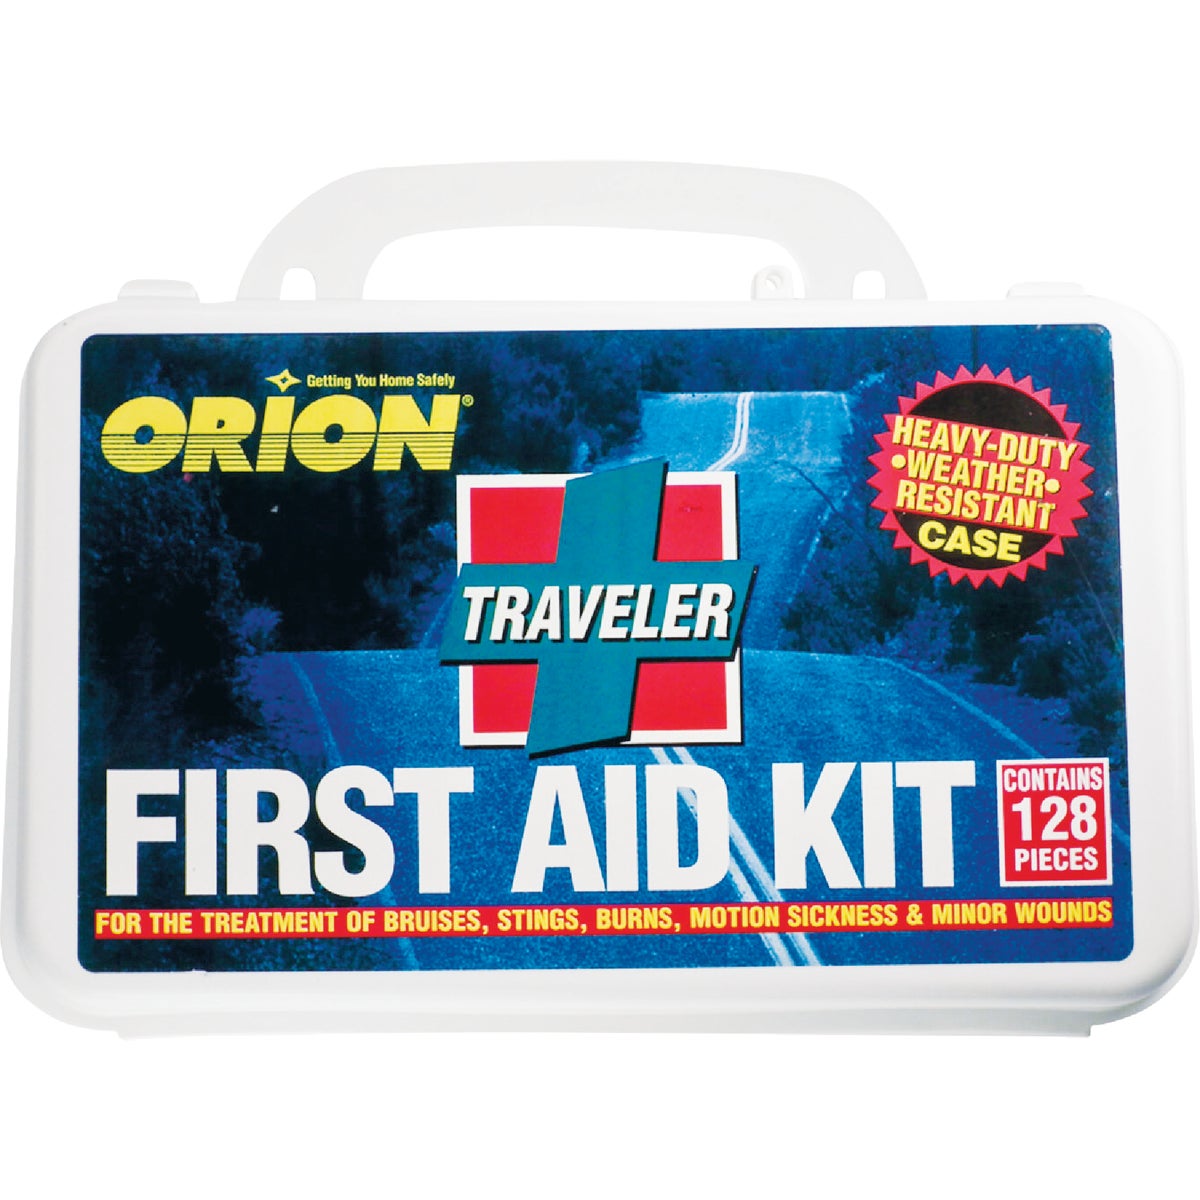 Orion Premium Emergency Road Kit (128-Piece)